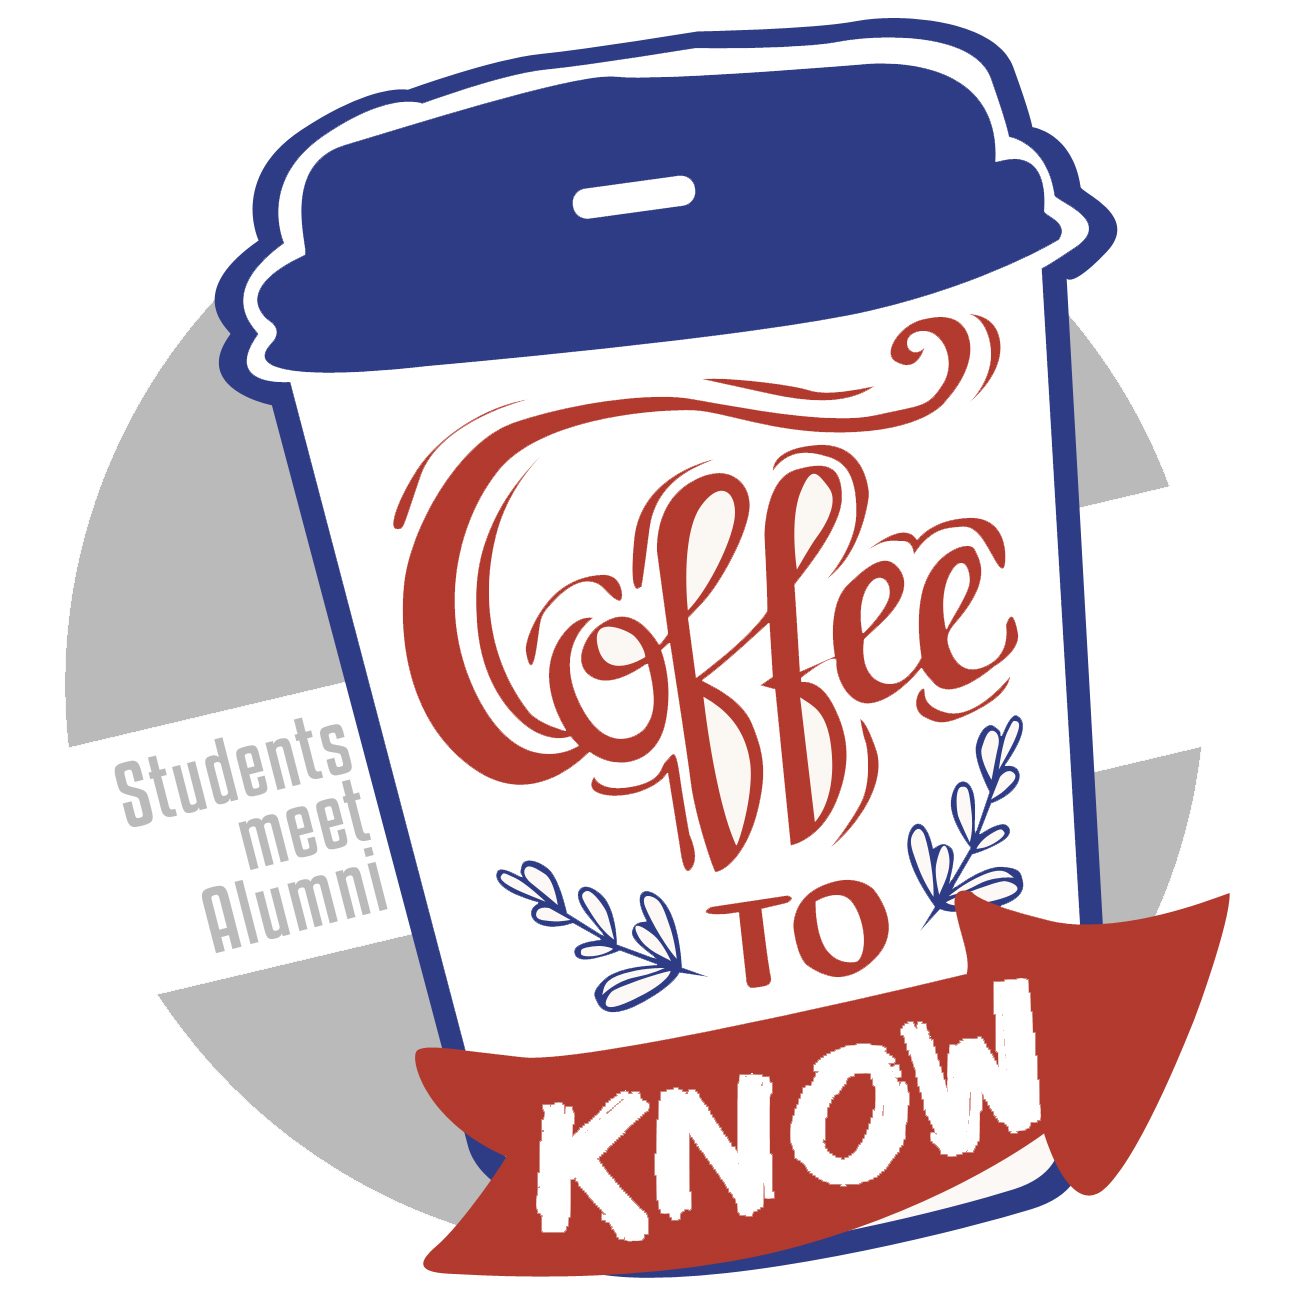 Logo: Students meet Alumni. Coffee to know.